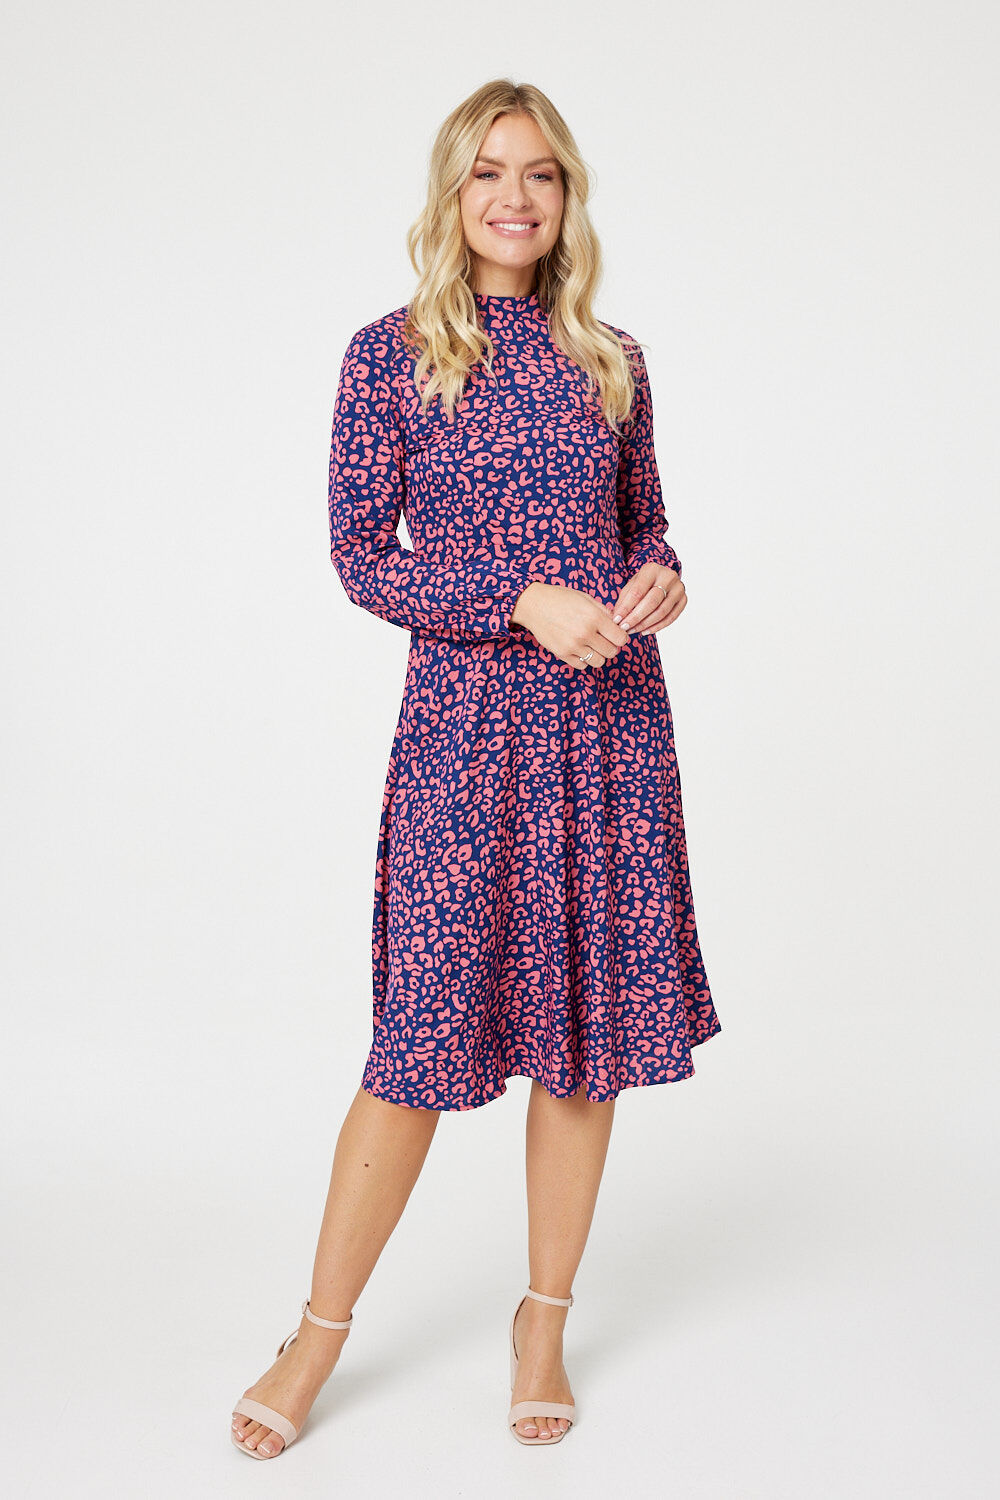 Izabel London Women’s Blue Leopard Print Stylish High Neck Tea Dress, Size: 14